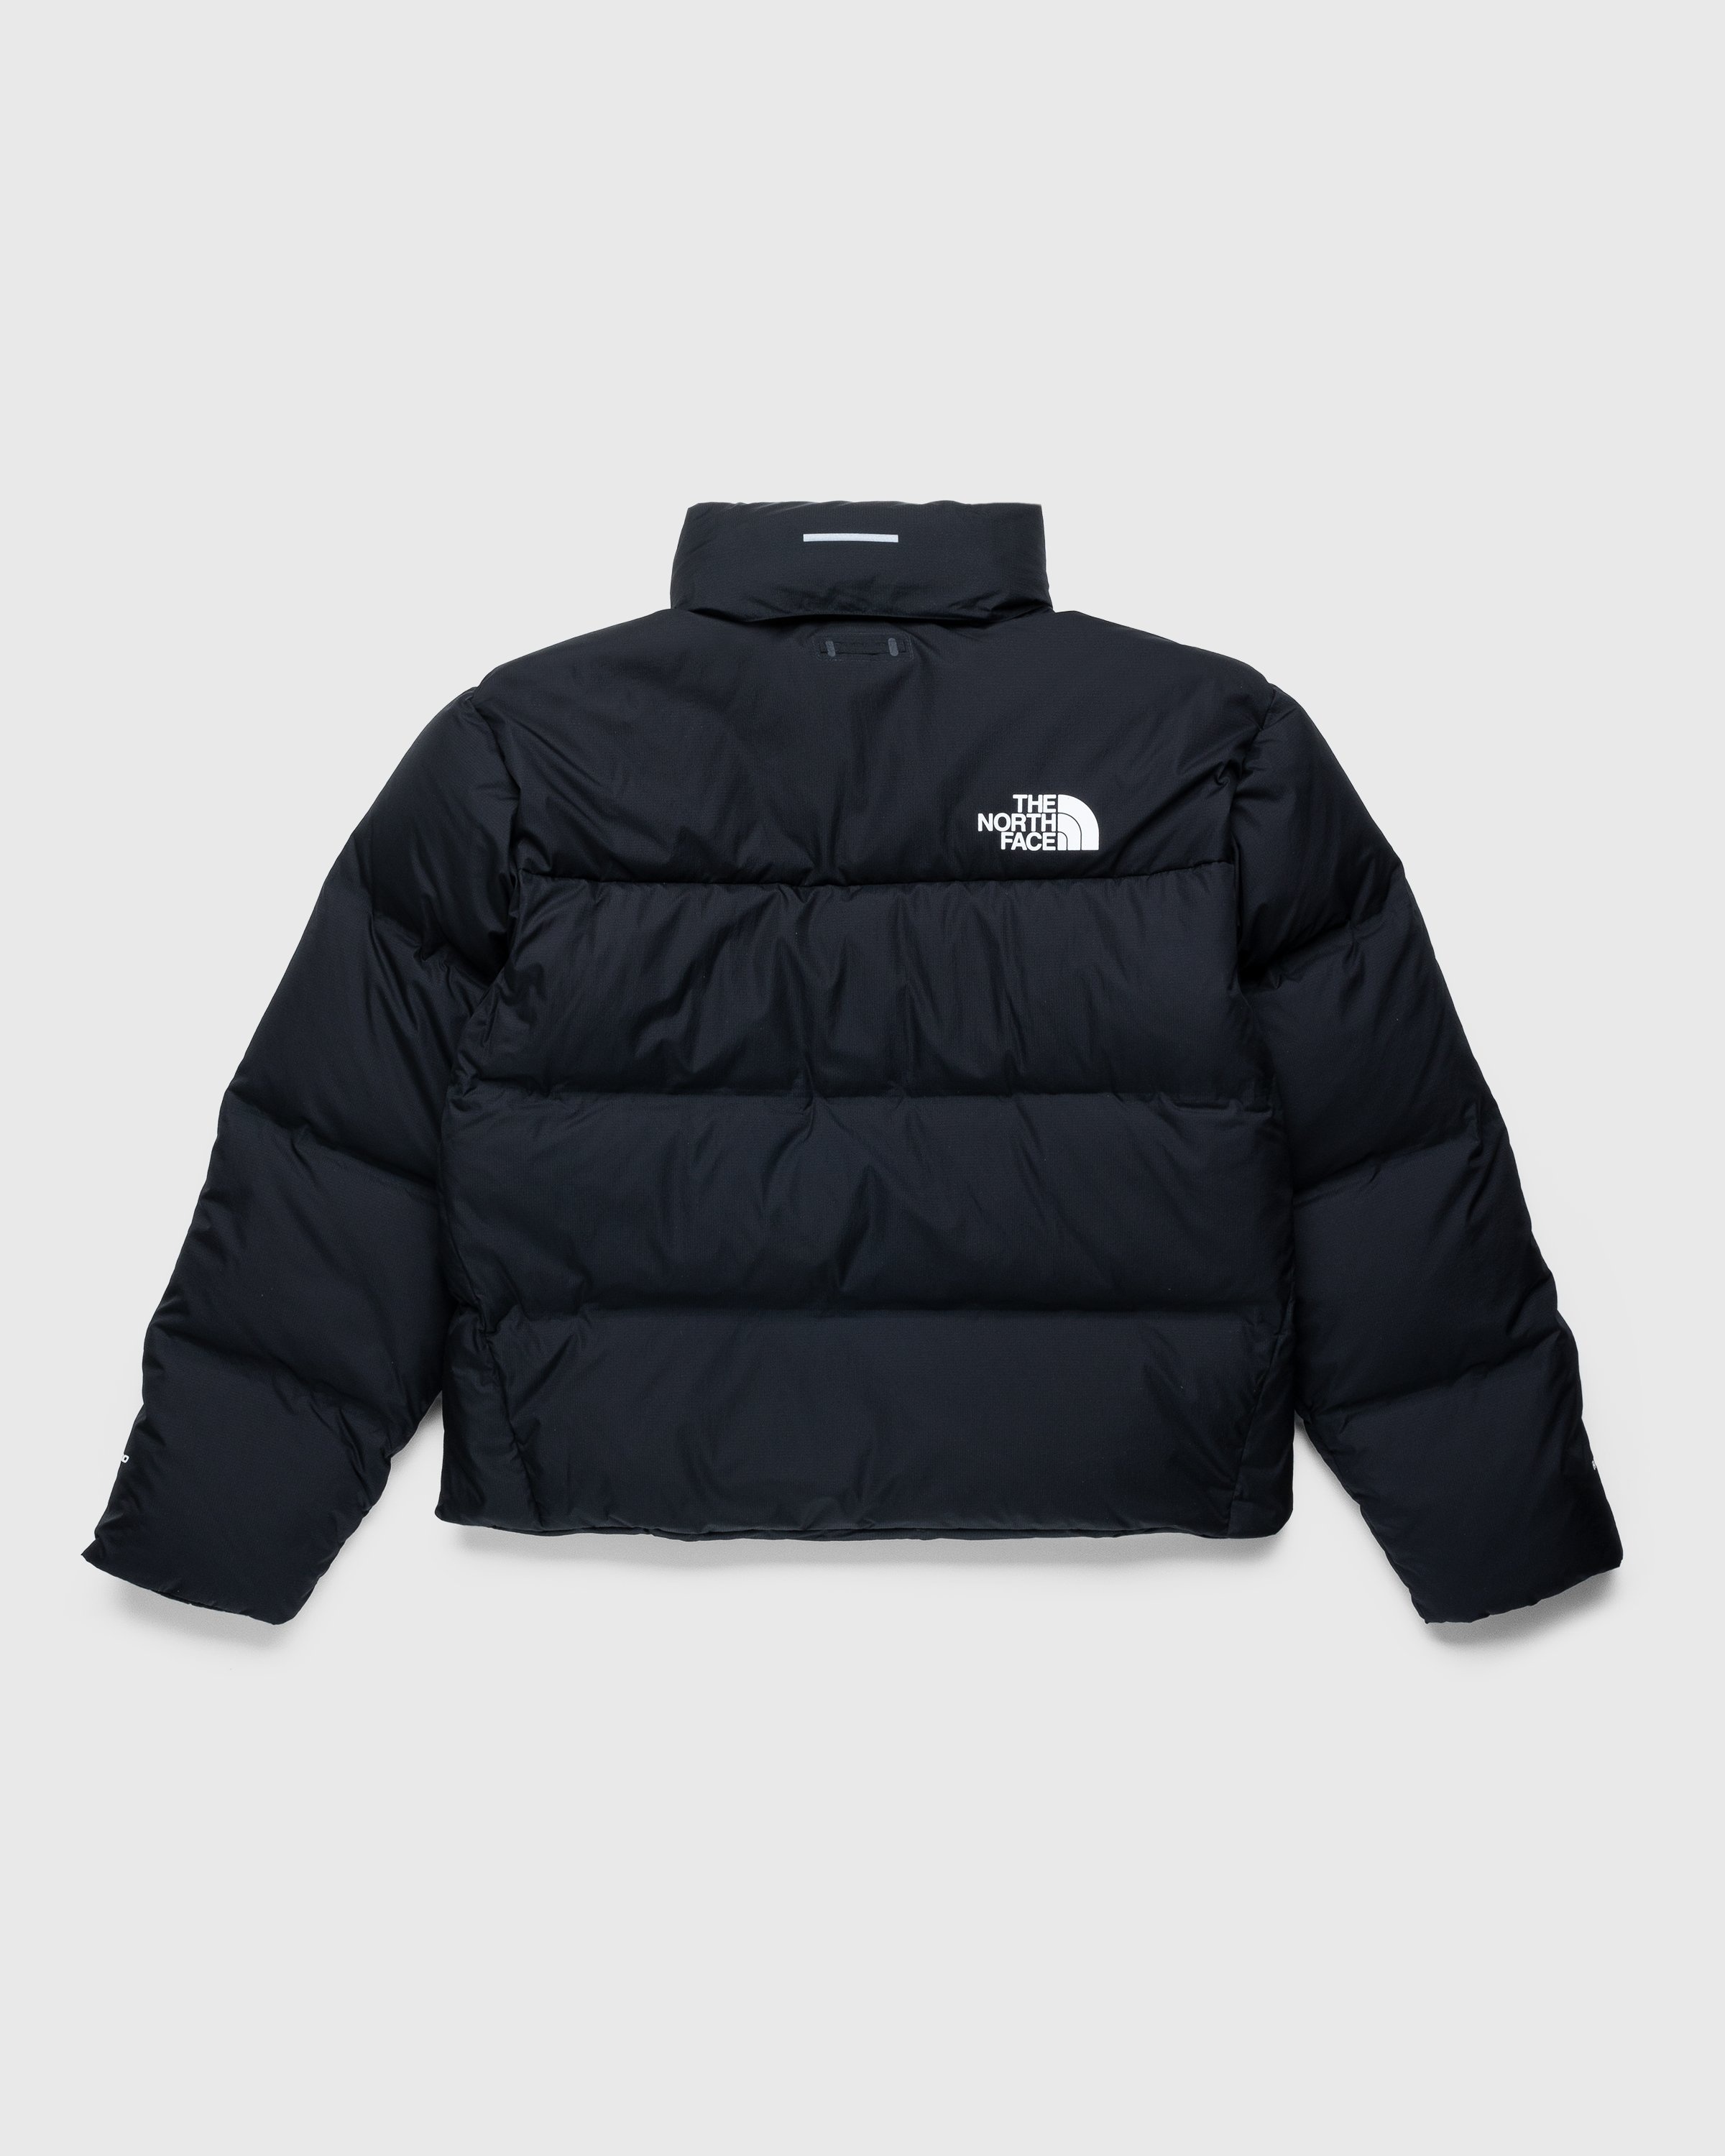 The North Face Jacket TNF Black | Highsnobiety Shop